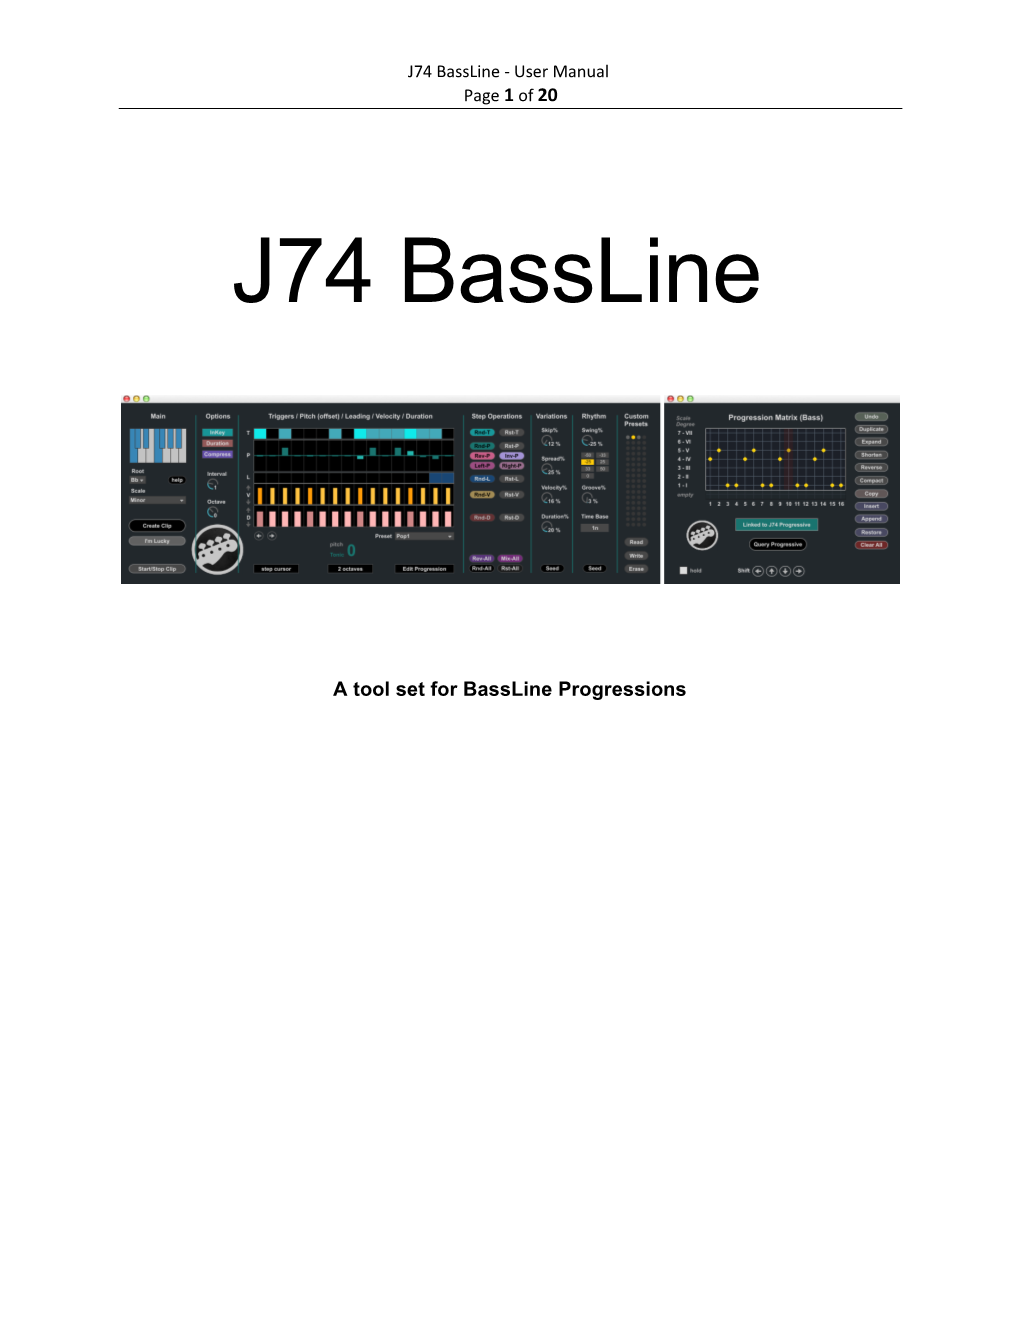 J74 Bassline - User Manual Page 1 of 20